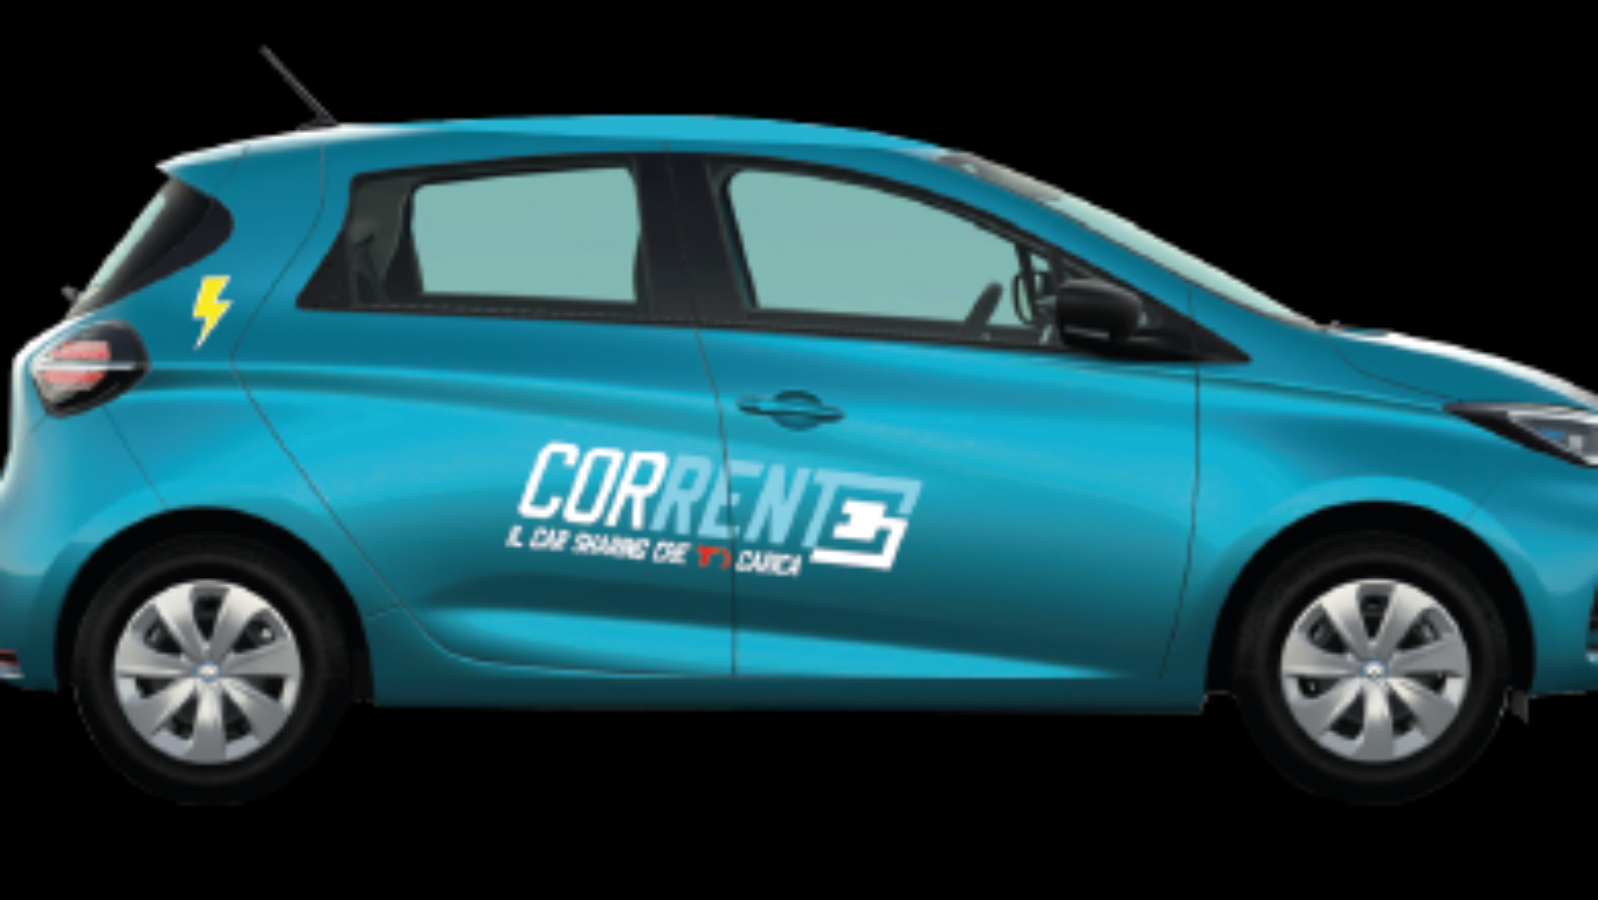 Corrente - car sharing